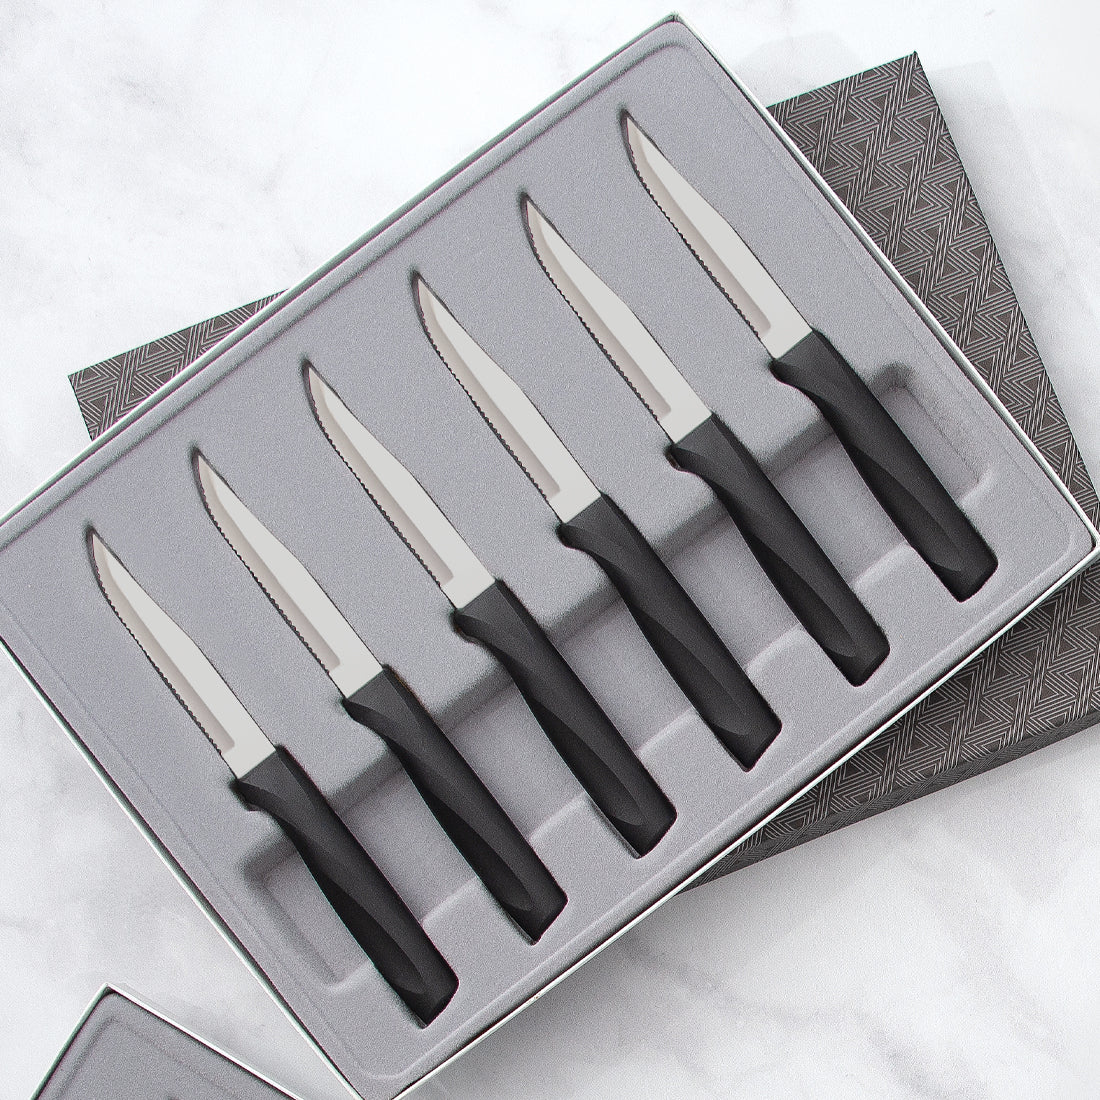 Essential Oak Block Knife Set PLUS Free Sharpener – American Pride